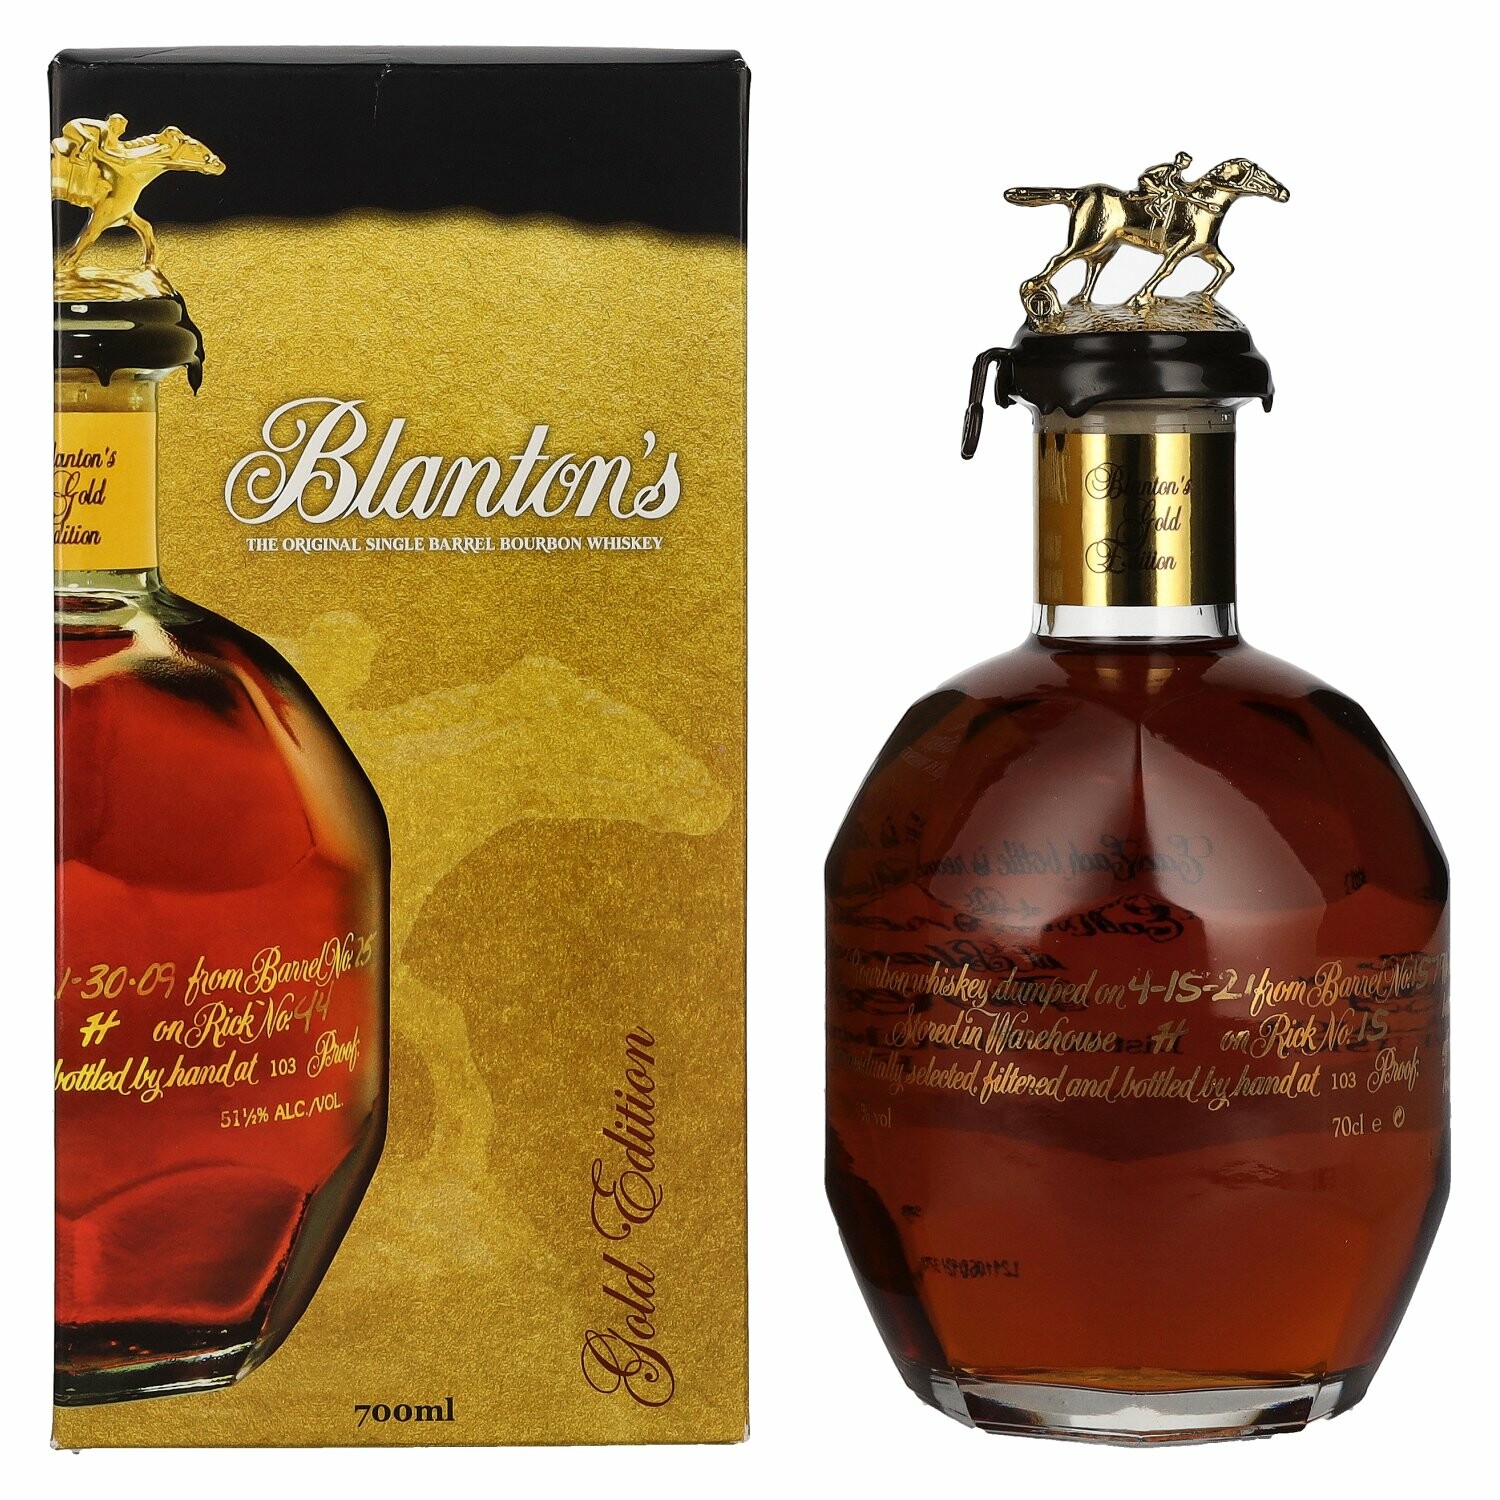 Blanton's GOLD EDITION The Original Single Barrel Bourbon Whiskey 51,5% Vol. 0,7l in Giftbox